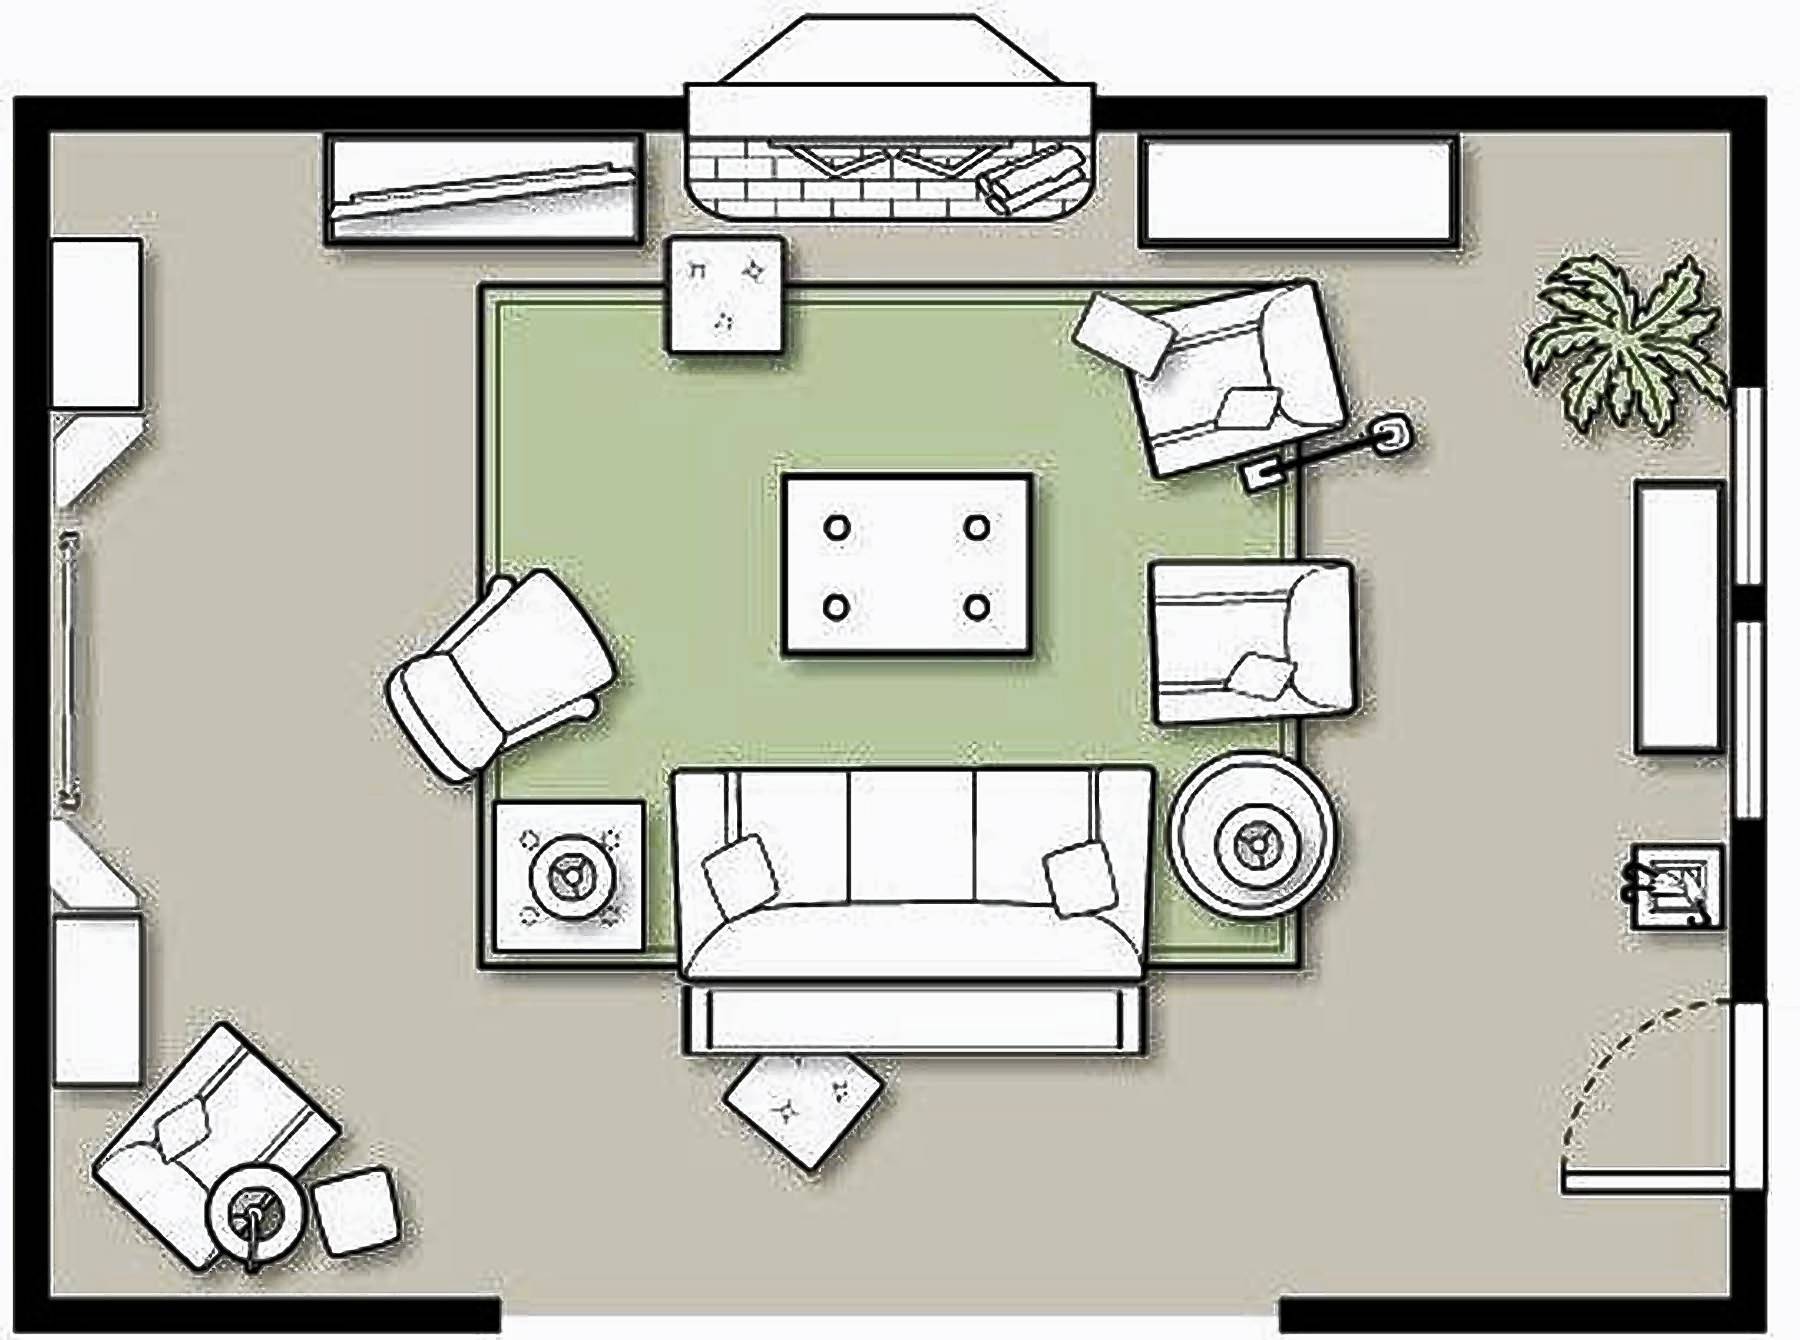 чертеж комнаты с размерами с мебелью